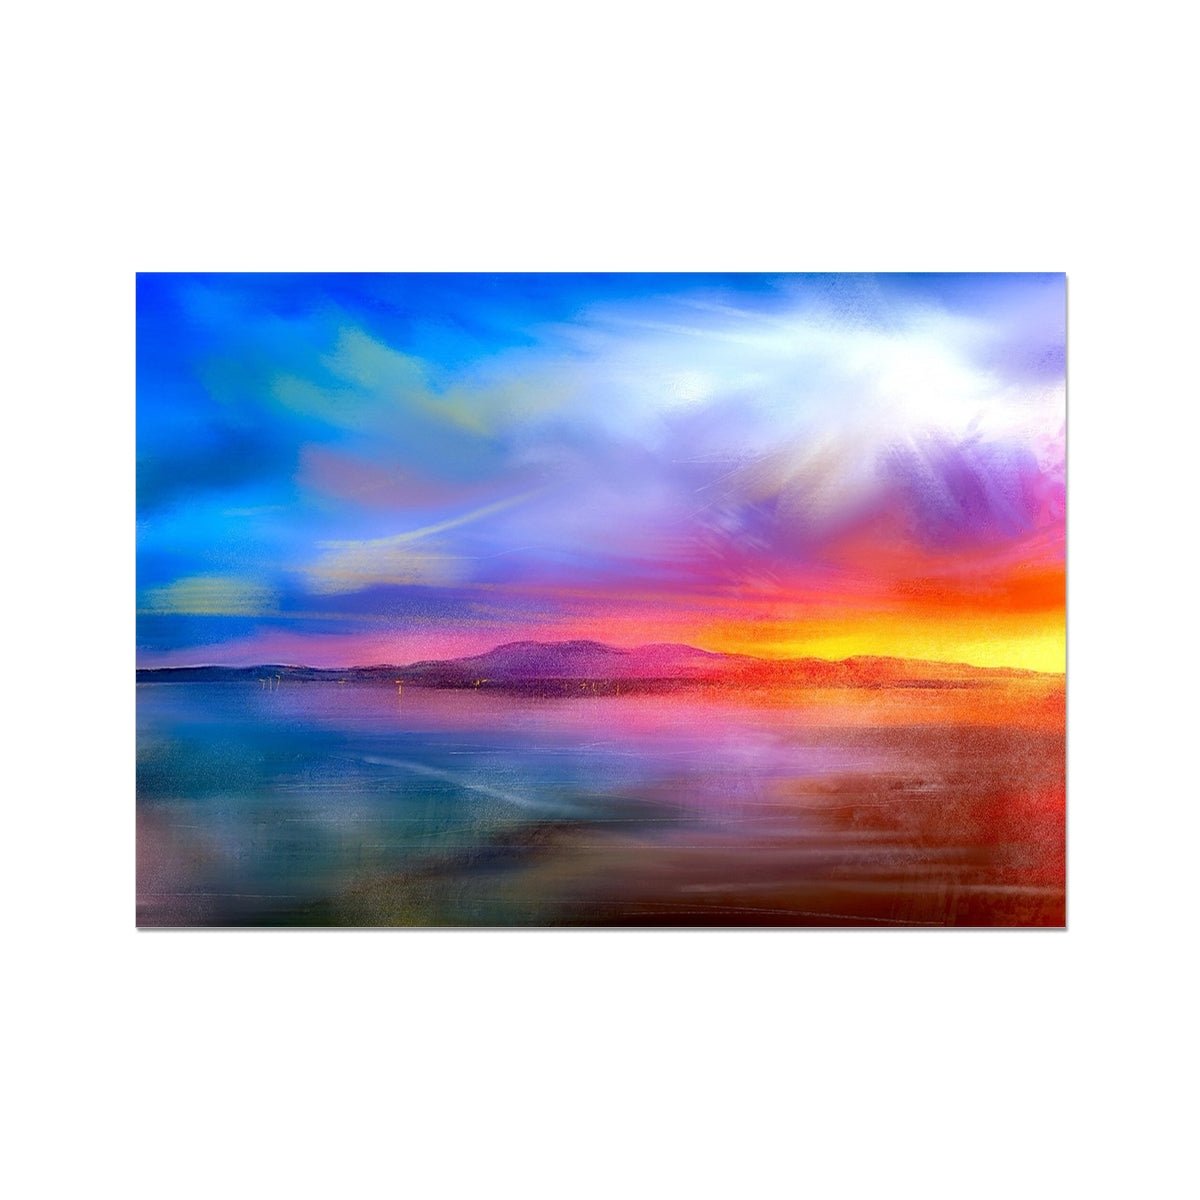 Arran Sunset Painting | Fine Art Prints From Scotland-Unframed Prints-Arran Art Gallery-A2 Landscape-Paintings, Prints, Homeware, Art Gifts From Scotland By Scottish Artist Kevin Hunter